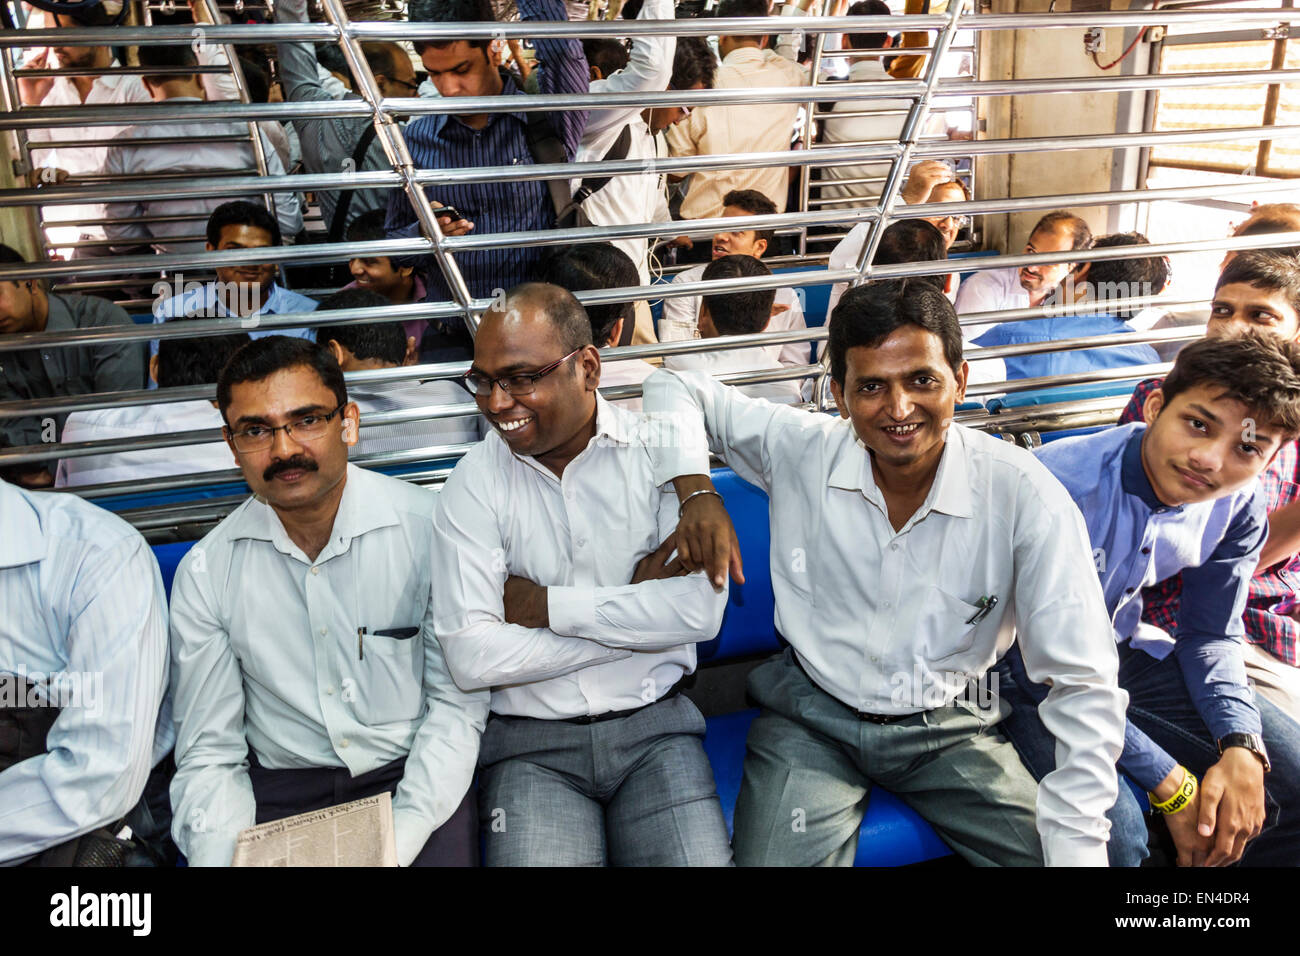 Mumbai India,Asian Andheri Railway Station,Western Line,train,commuters,riders,passenger passengers rider riders,man men male,2nd class cabin,sitting, Stock Photo